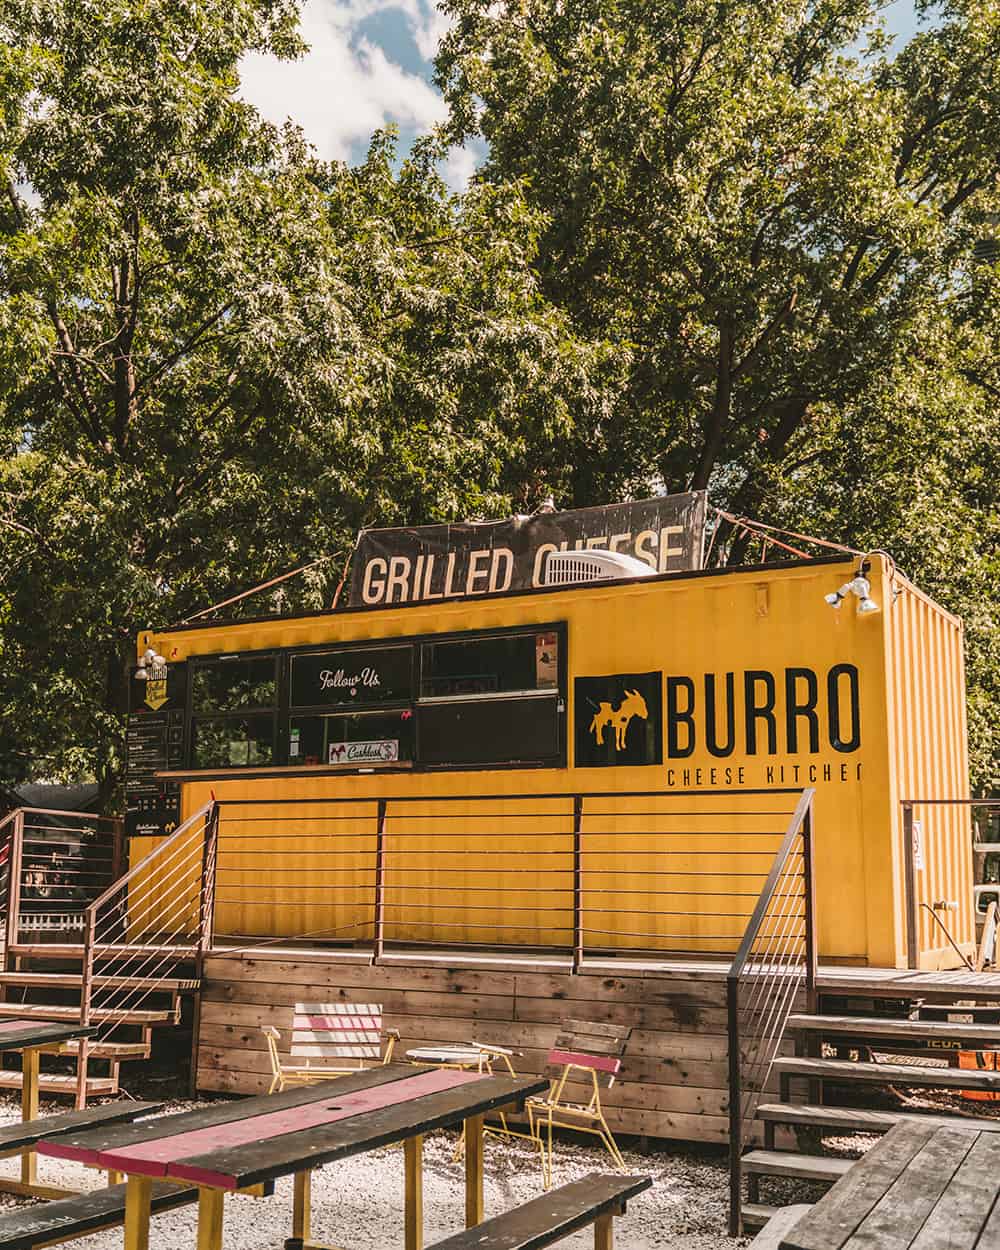 Burro Cheese Kitchen food truck in Austin Texas